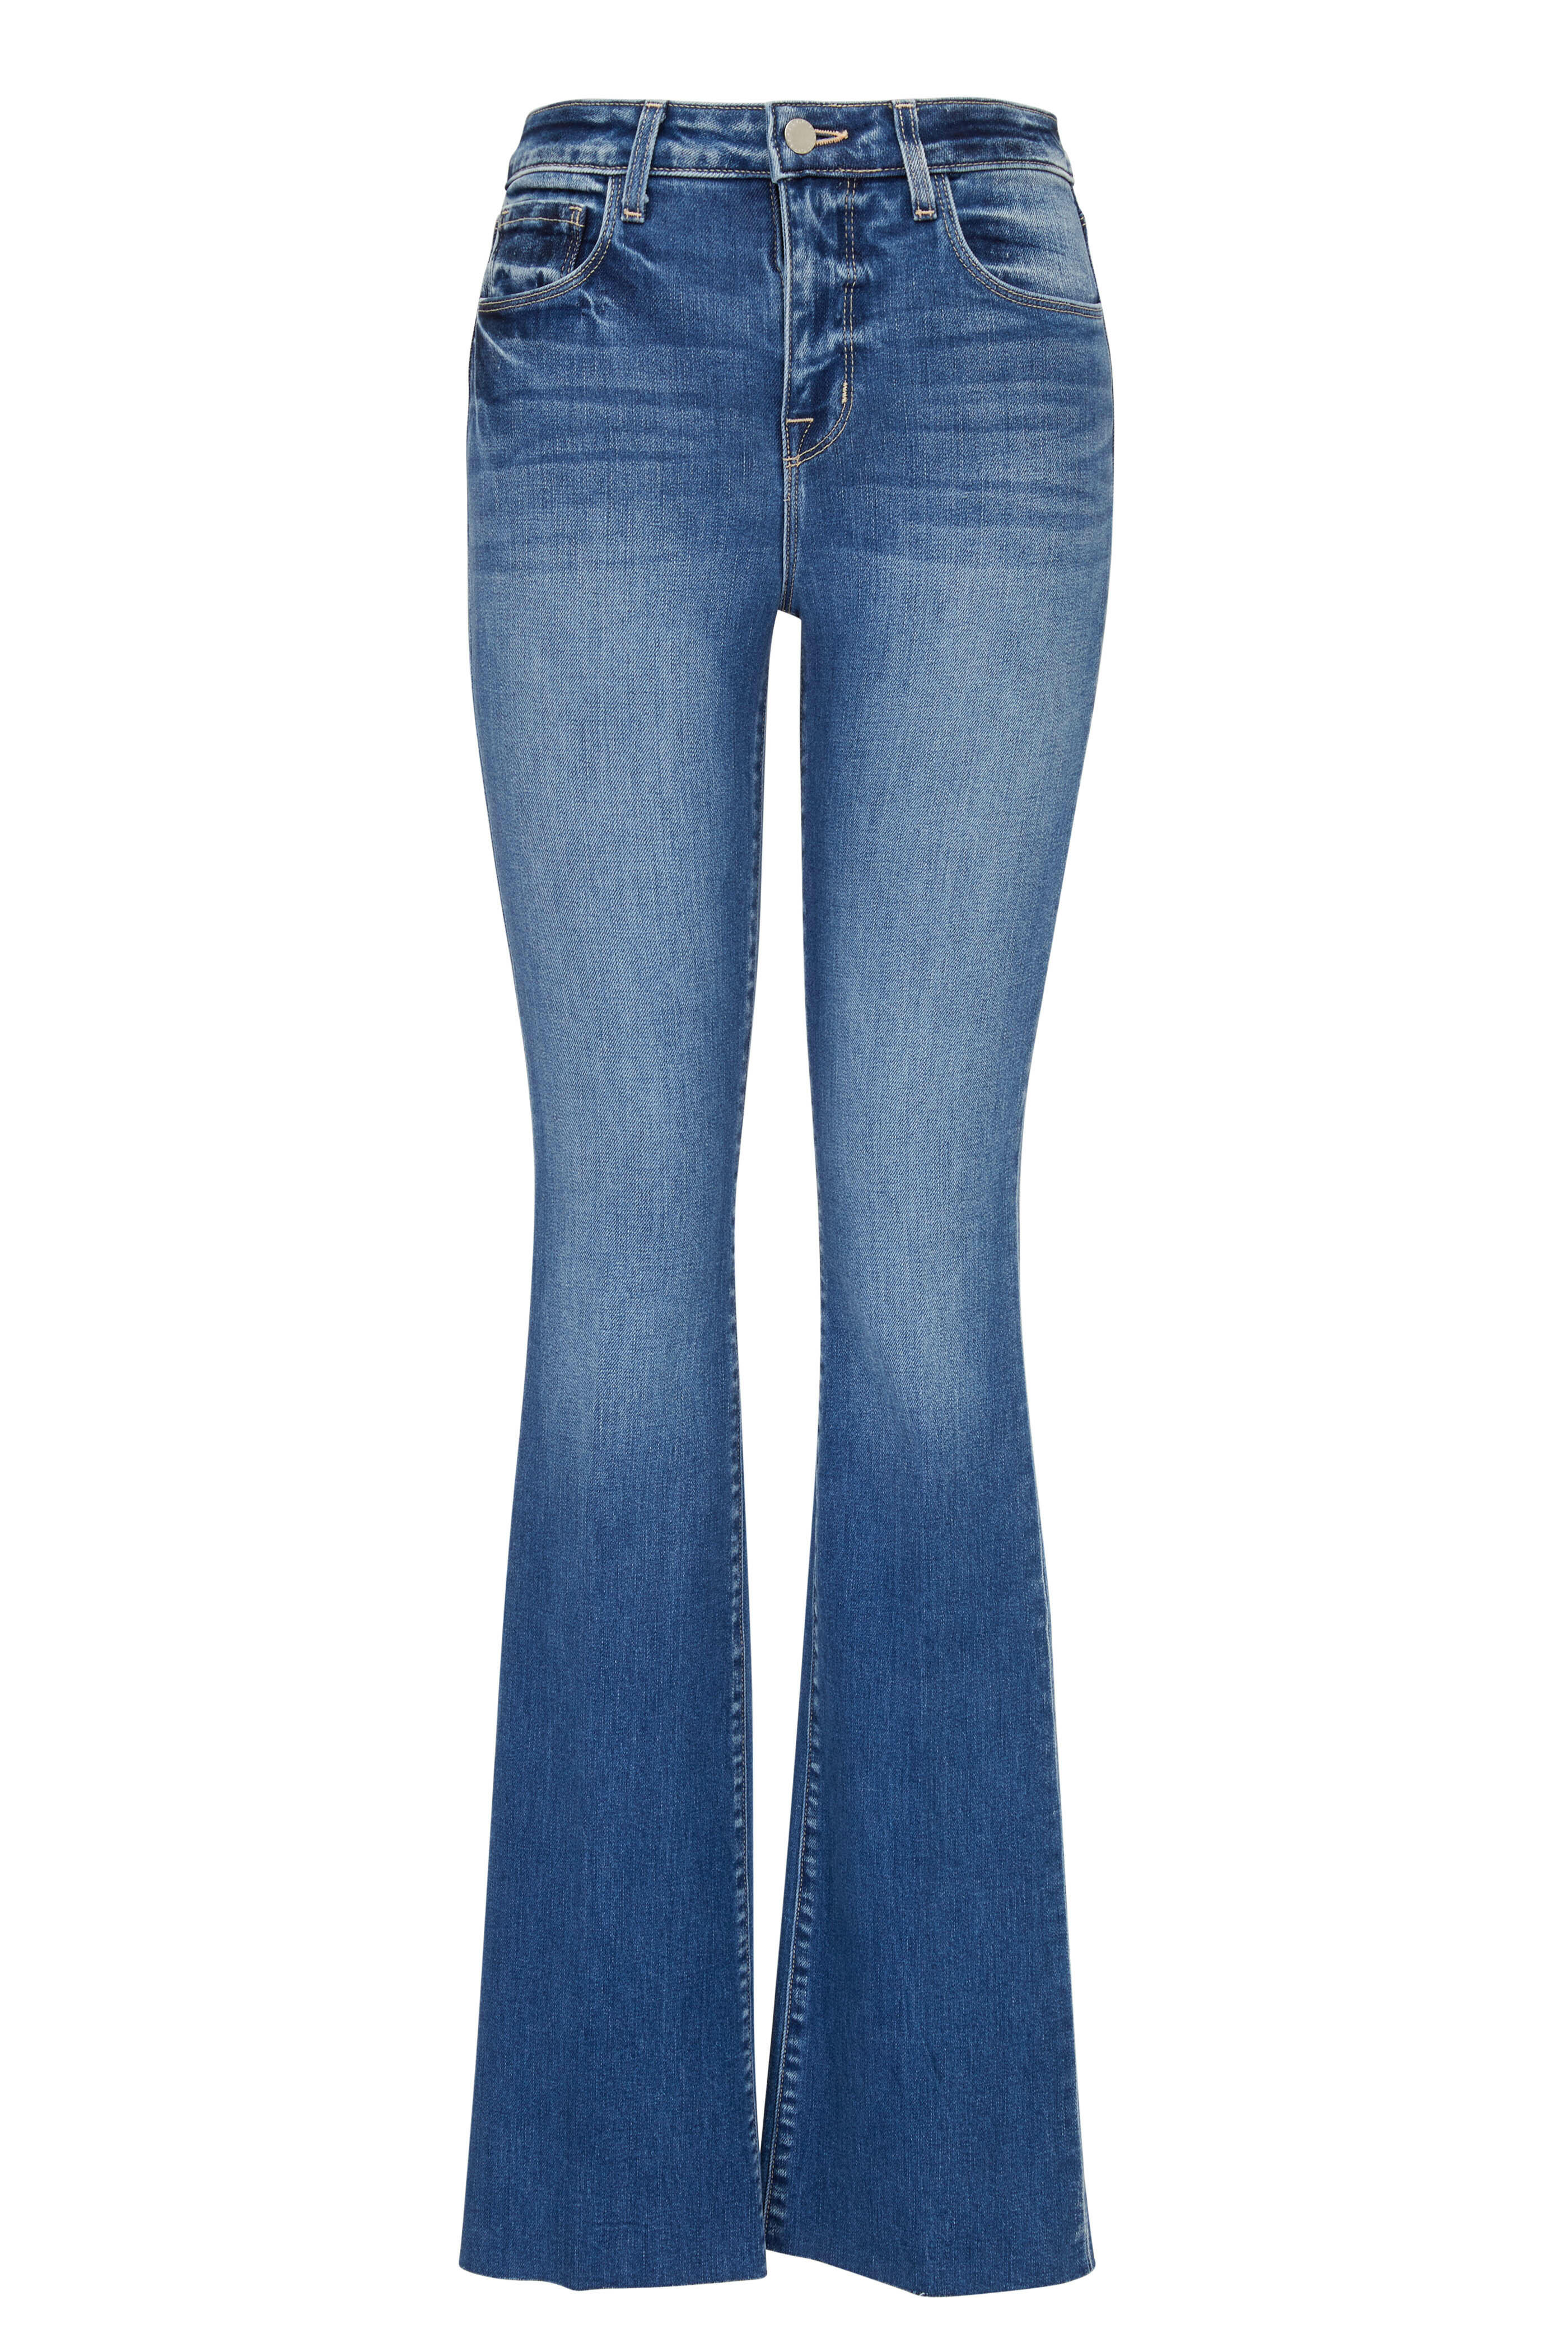 L'Agence - Ruth Cambridge High-Rise Straight Jean